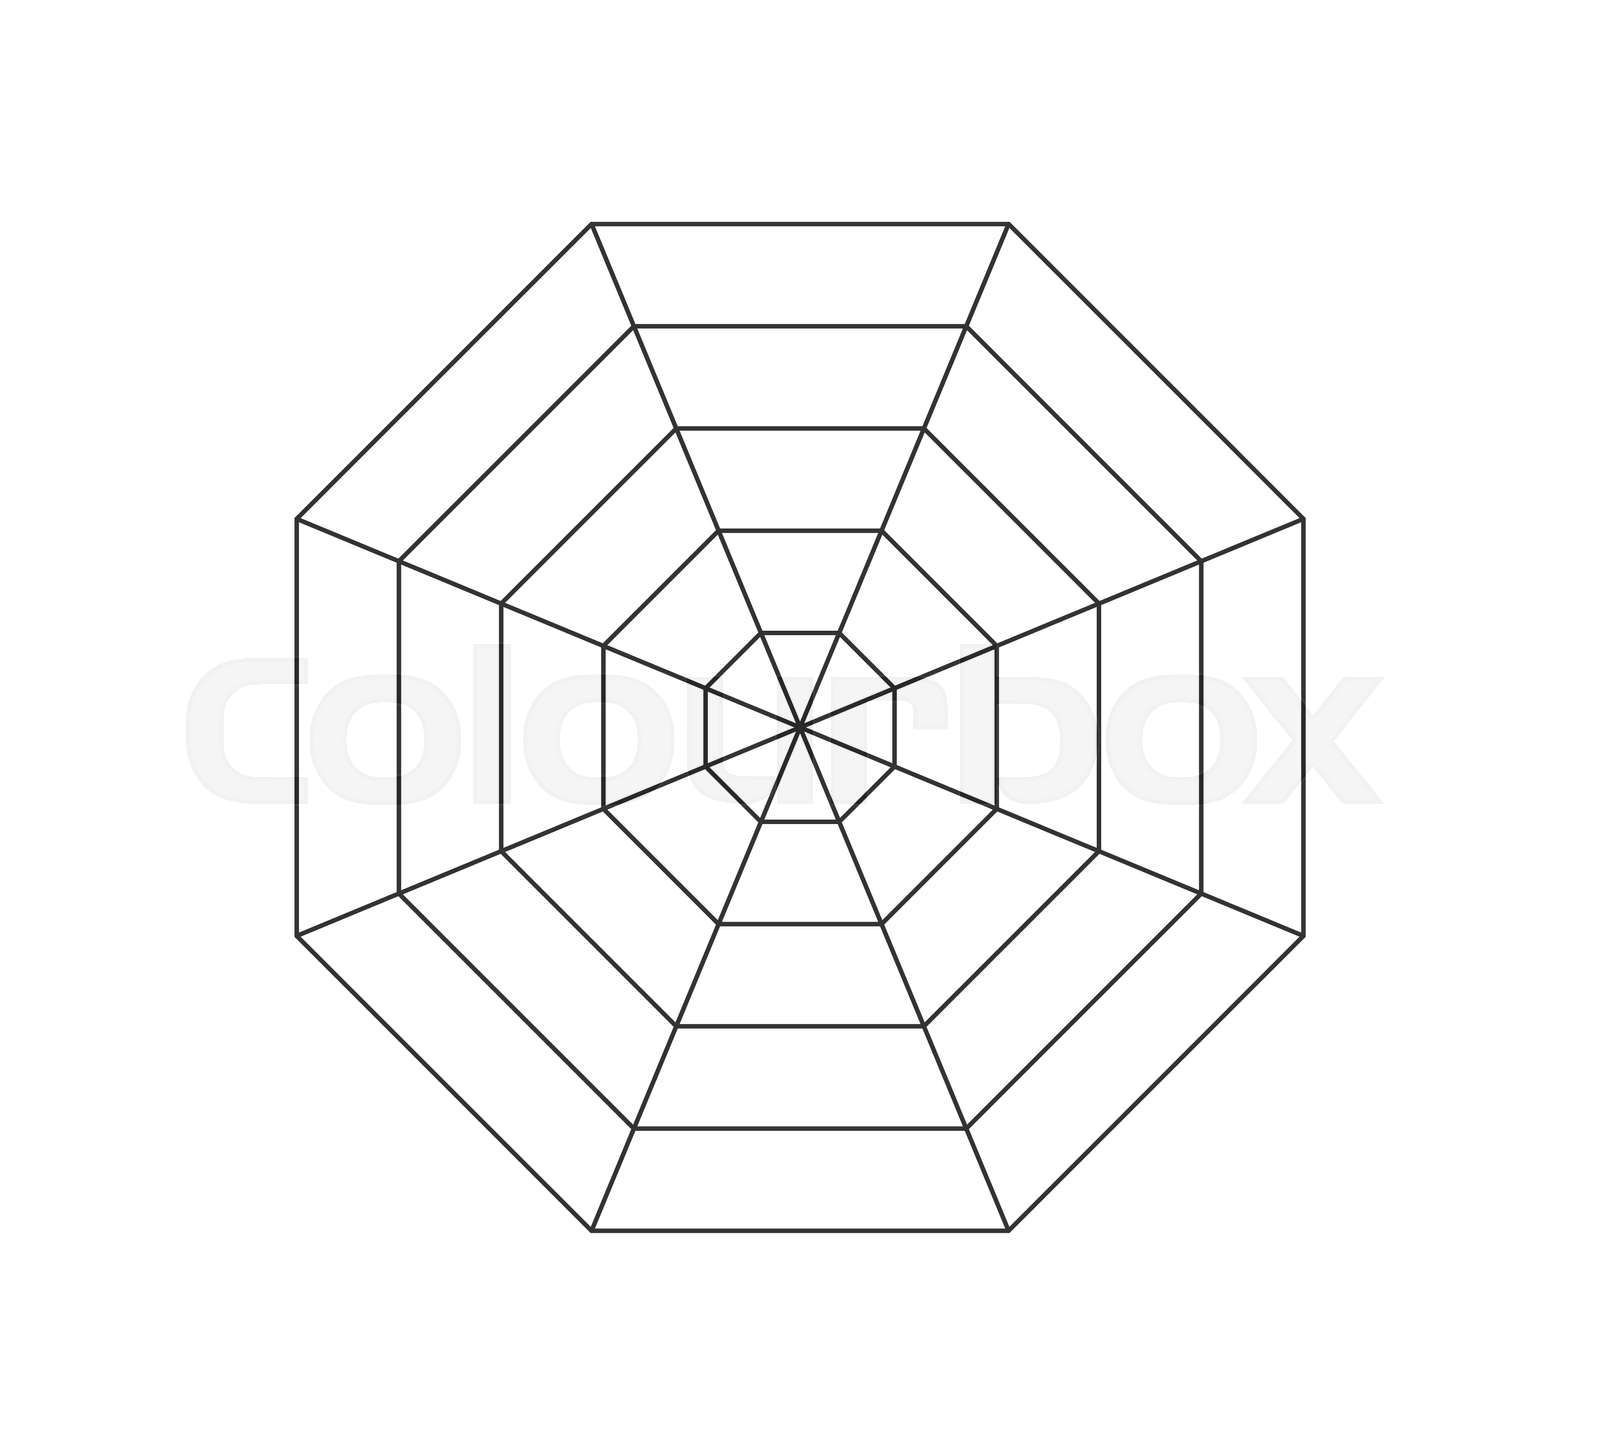 Octagonal radar or spider diagram template. Octagon graph. Flat